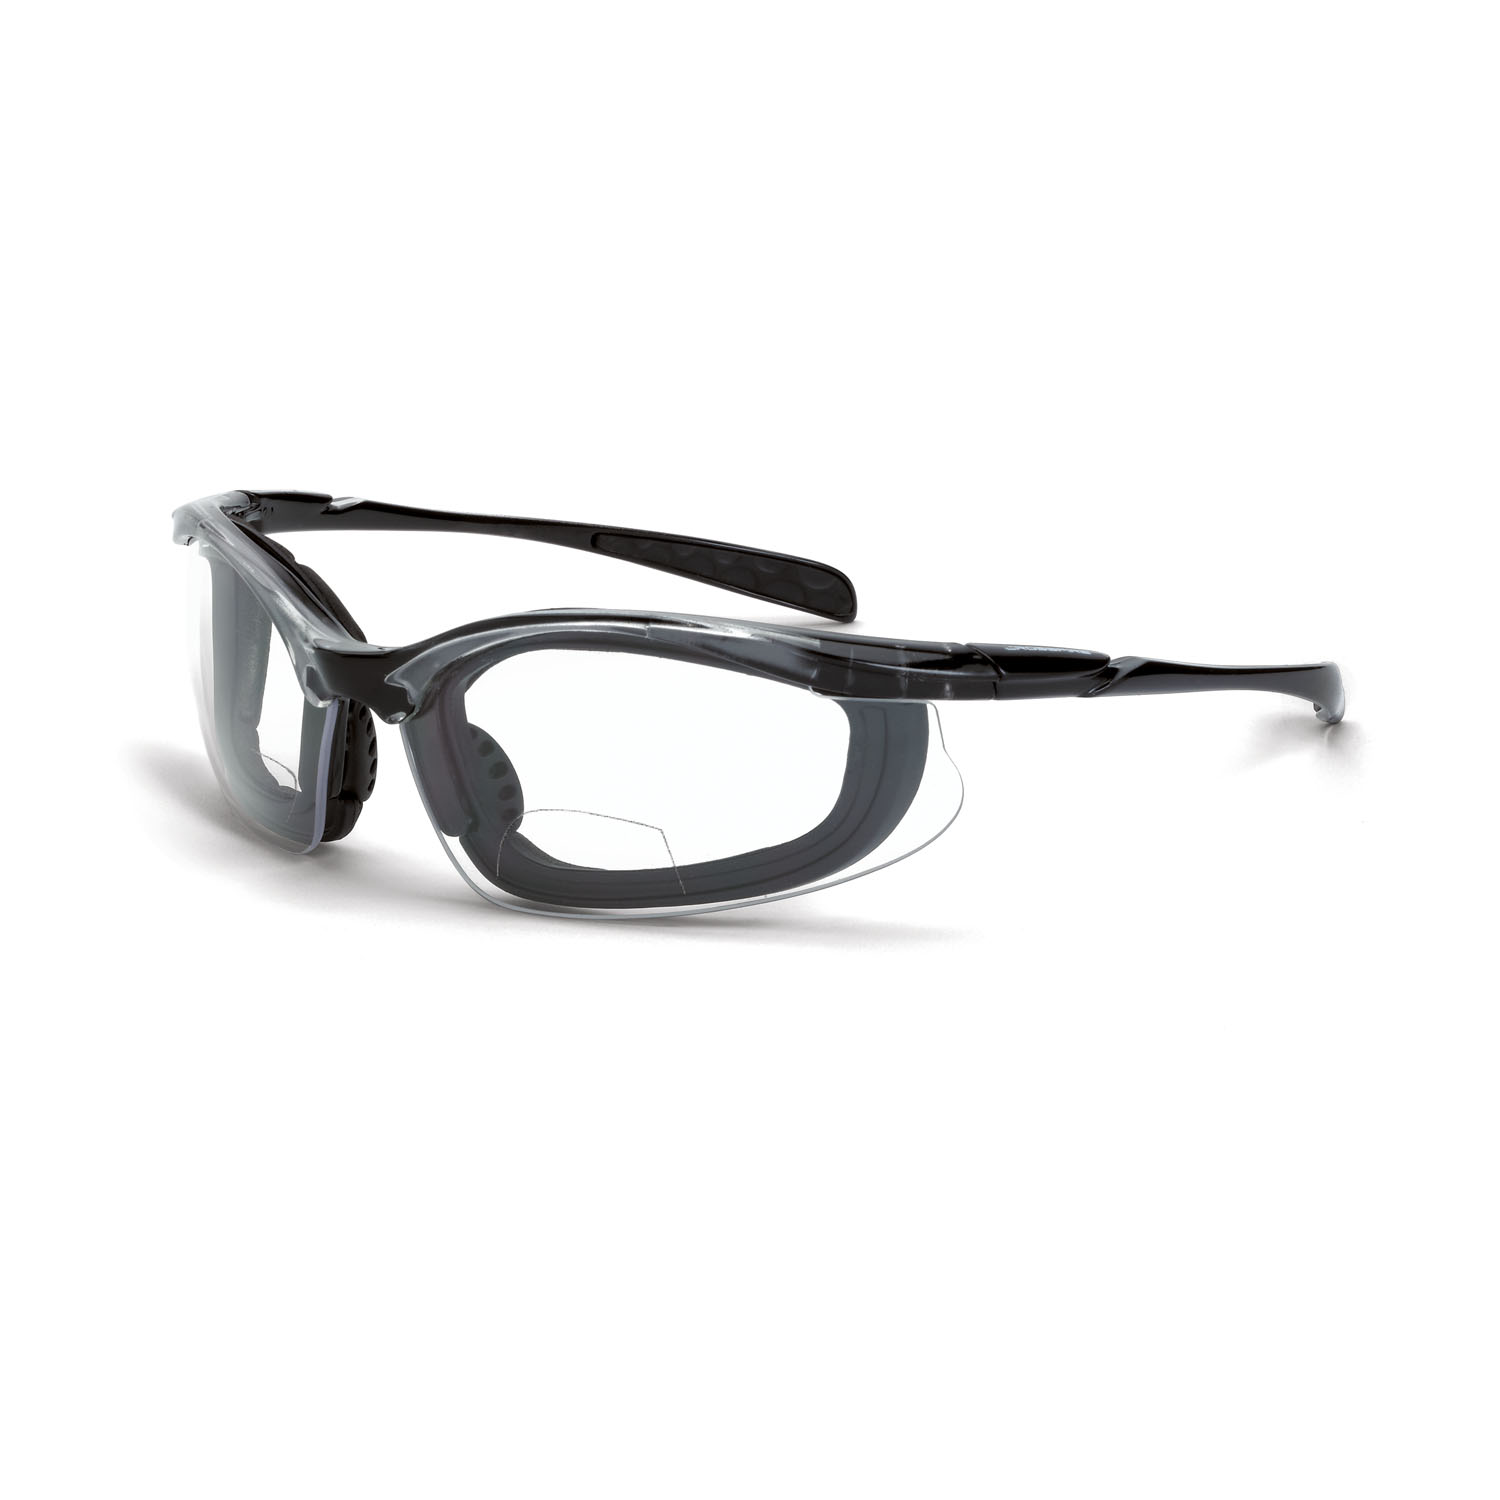 Concept Foam Lined Bifocal Safety Eyewear - Crystal Black Frame - Clear Lens - 2.0 Diopter - Bifocals